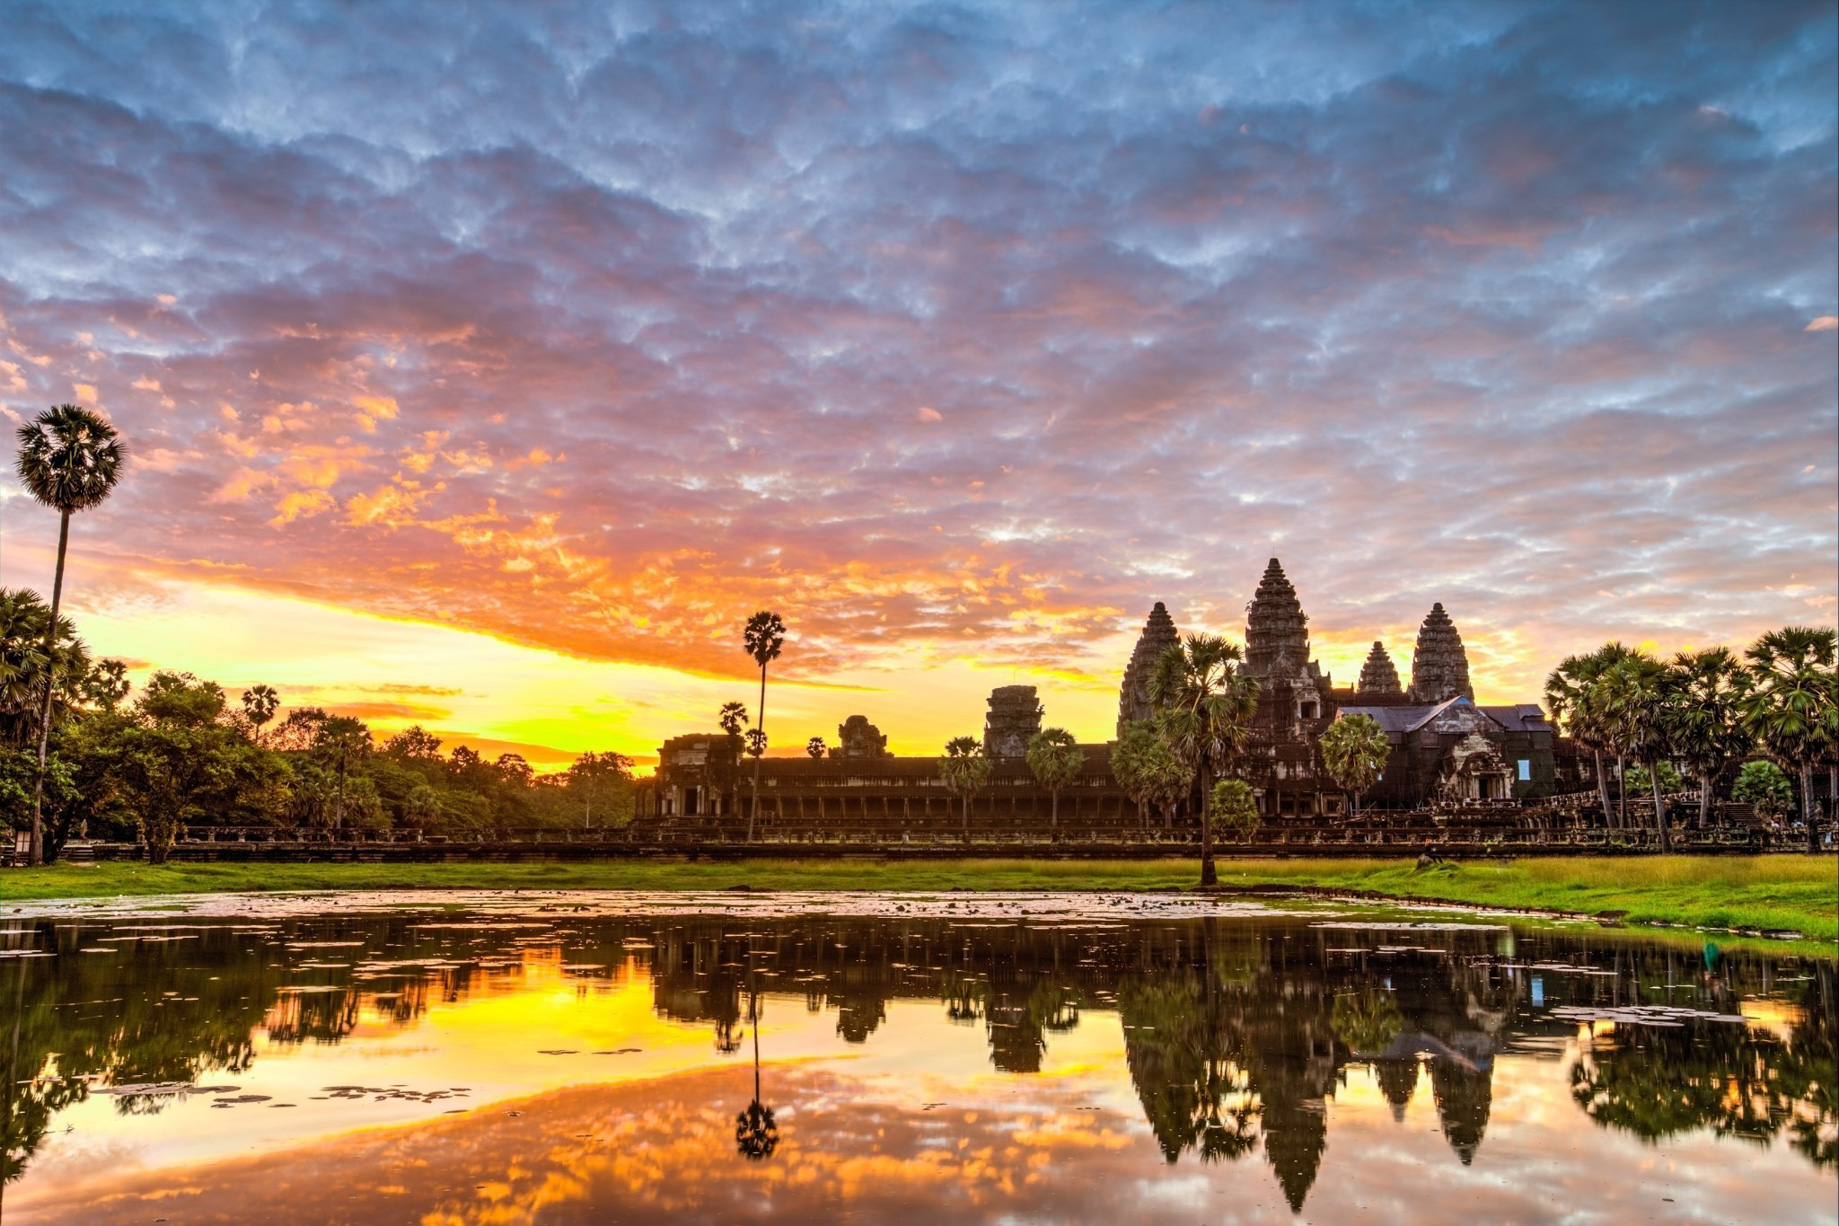 Anantara Angkor Resort – Siem Reap, Cambodia – Angkor Wat Sunset